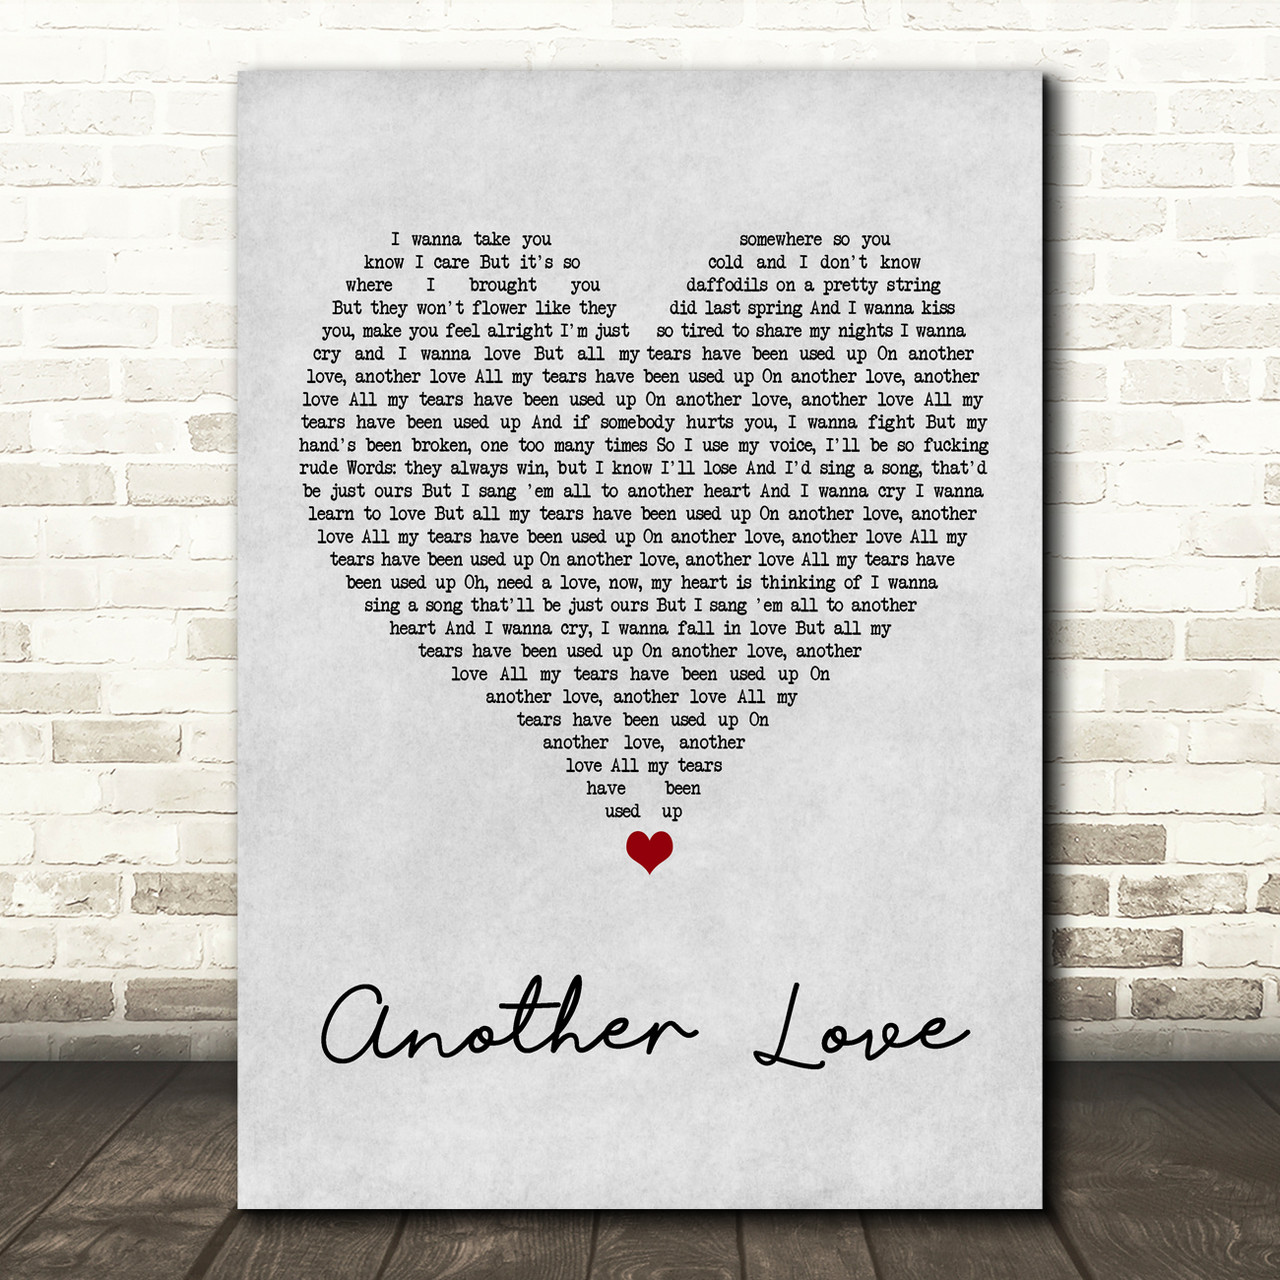 Tom Odell - Another love (Lyrics) 